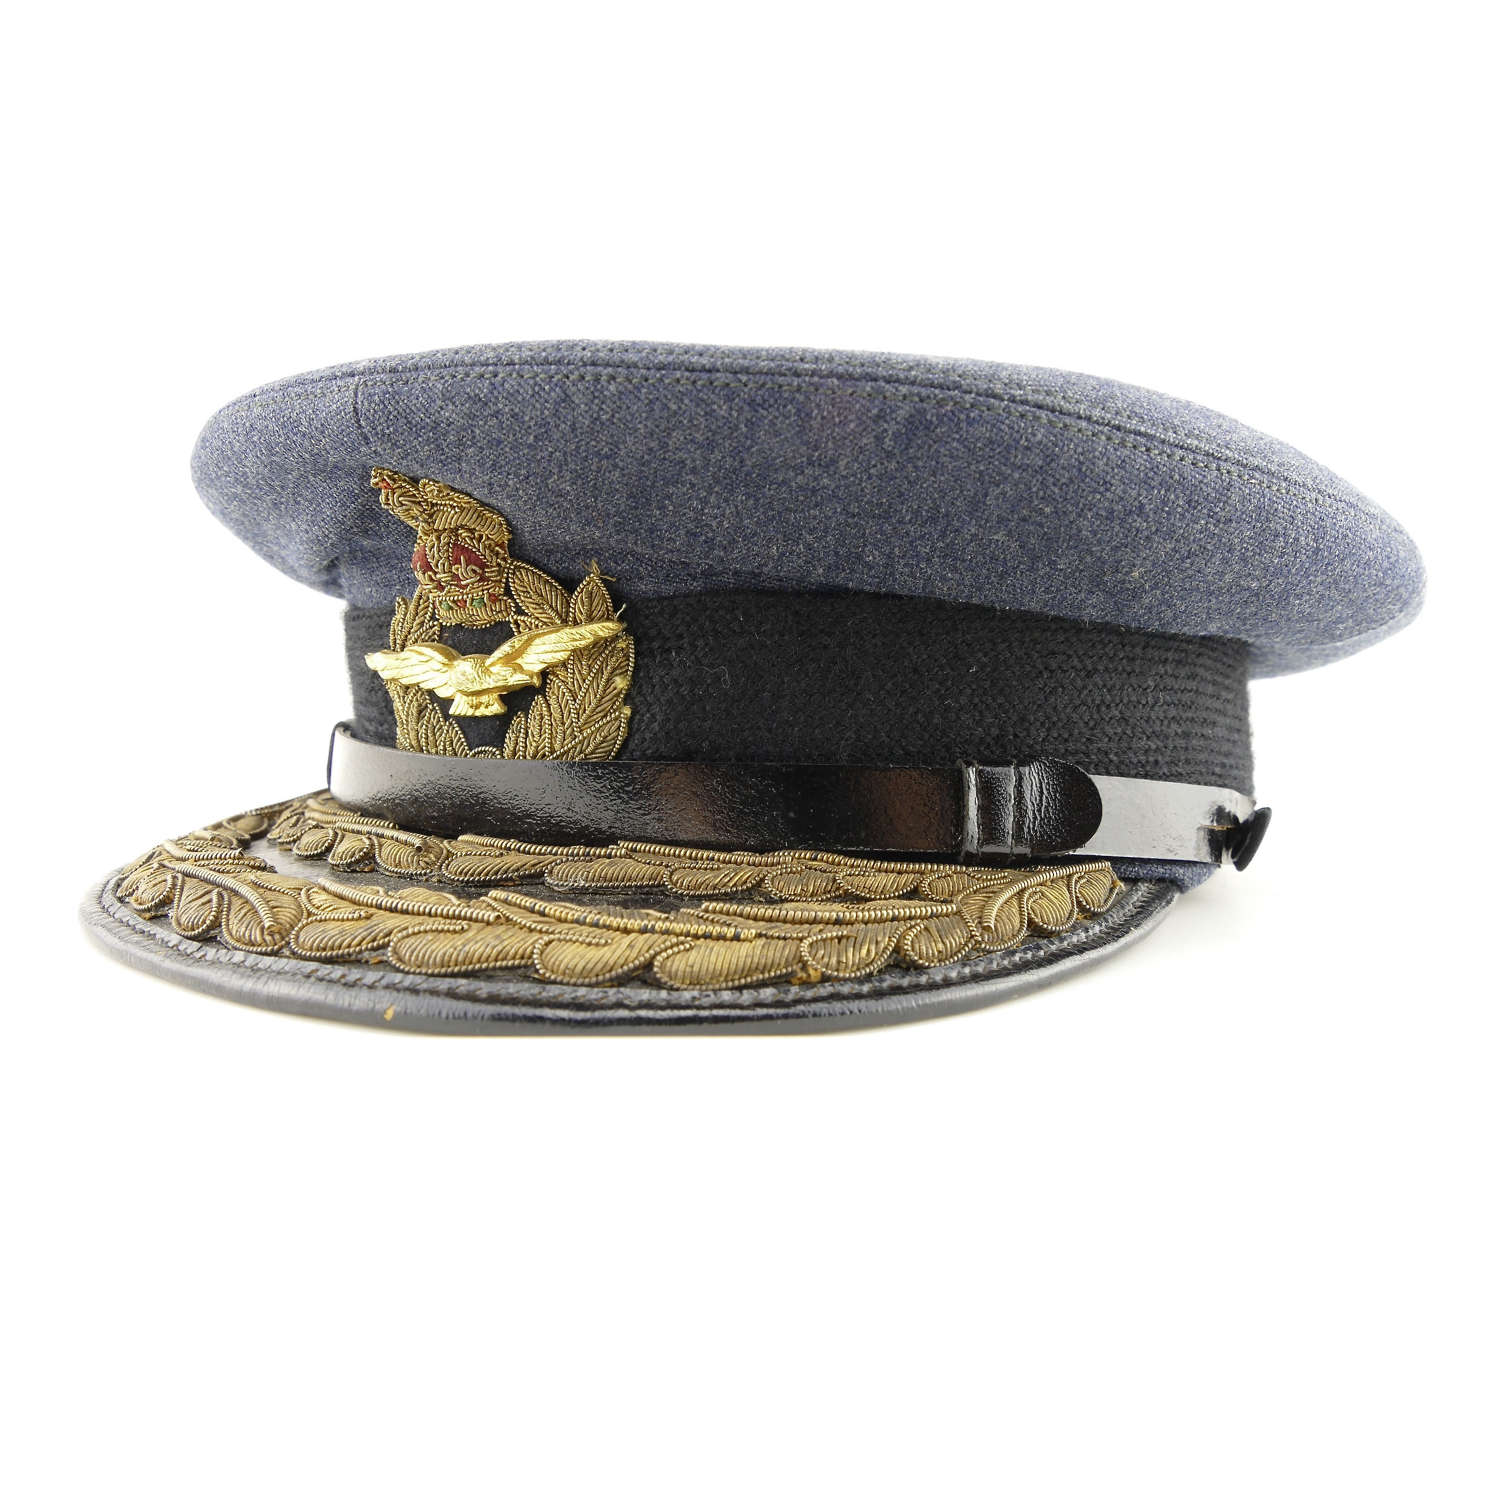 RAF 'Air Rank' service dress cap